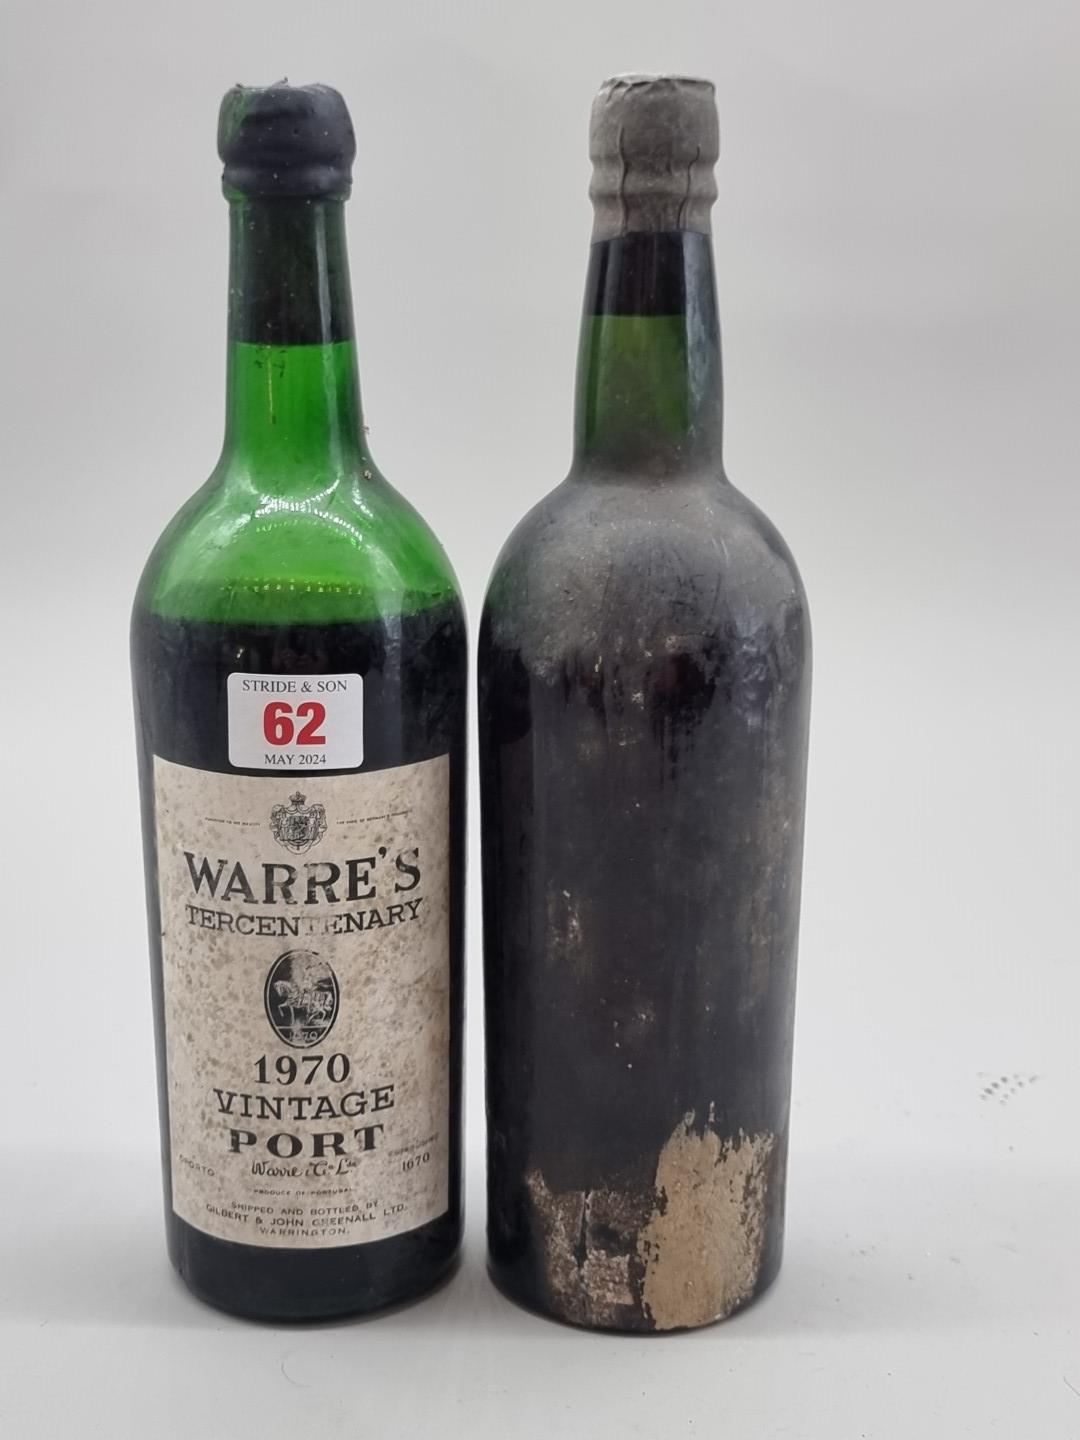 A bottle of Warre's 1970 Vintage Port, (low shoulder level); together with another old bottle of